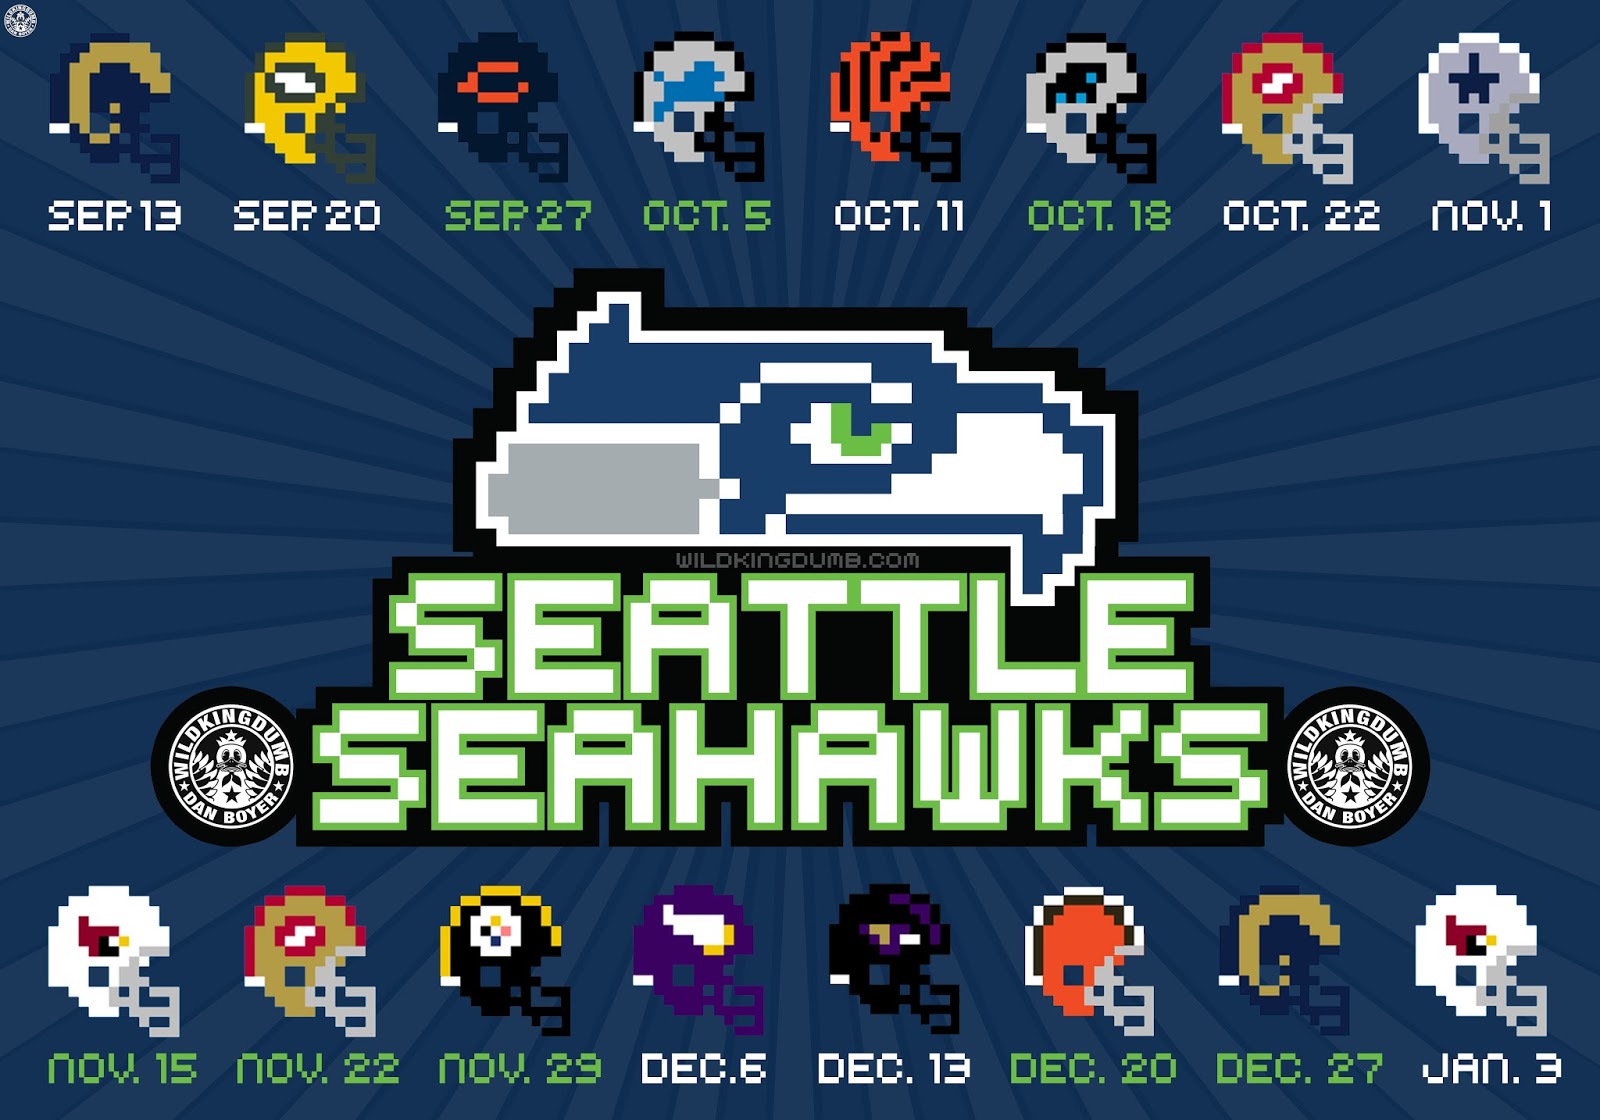 seahawks schedule 2015